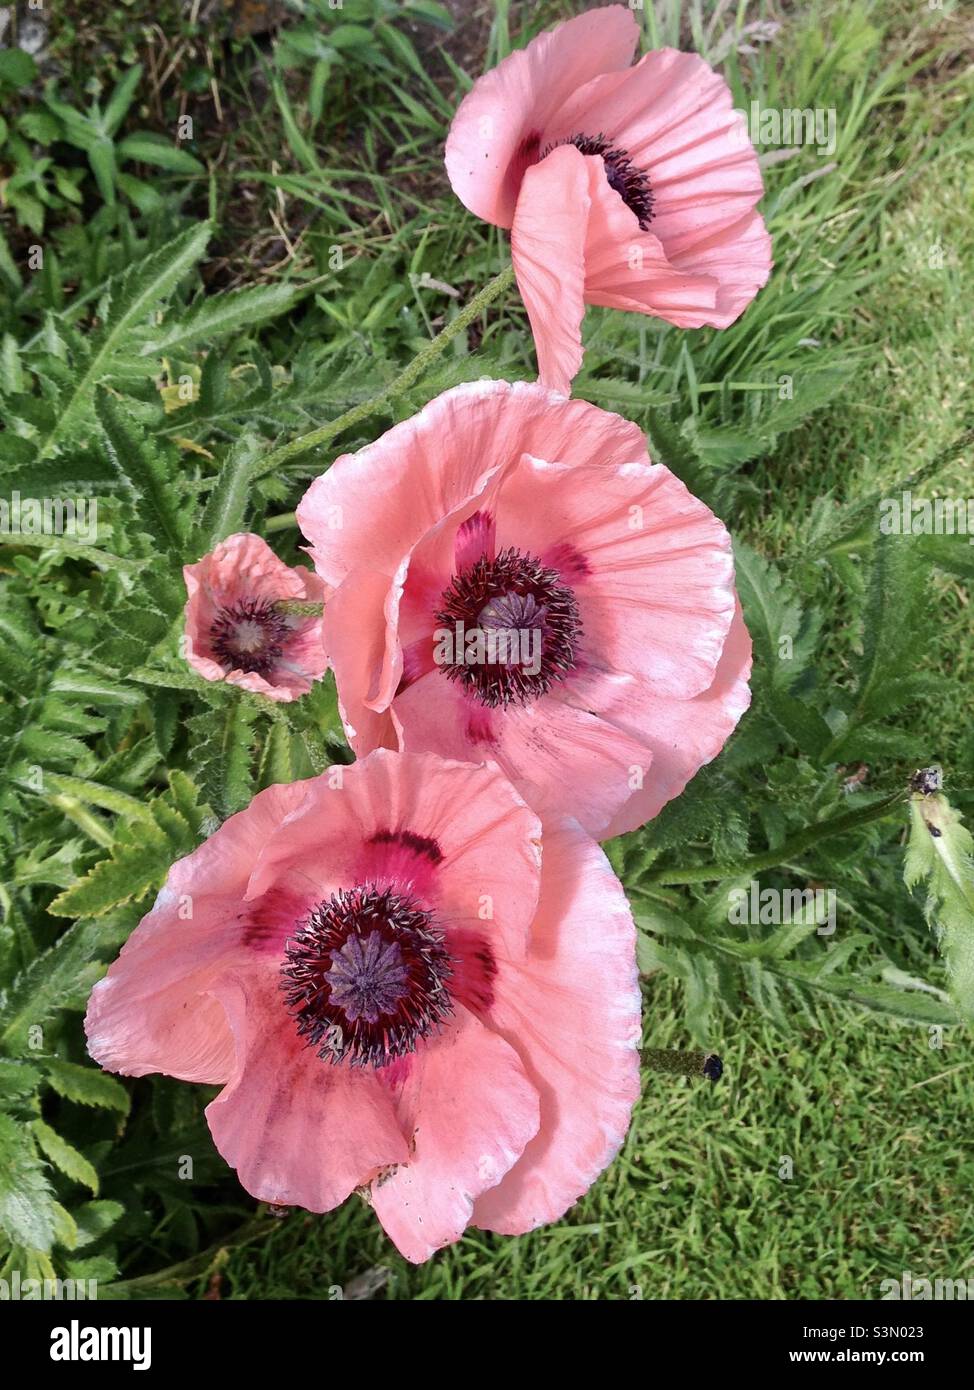 Rosa Mohnblumen wachsen in einem Garten in Pembrokeshire West Wales UK Stockfoto